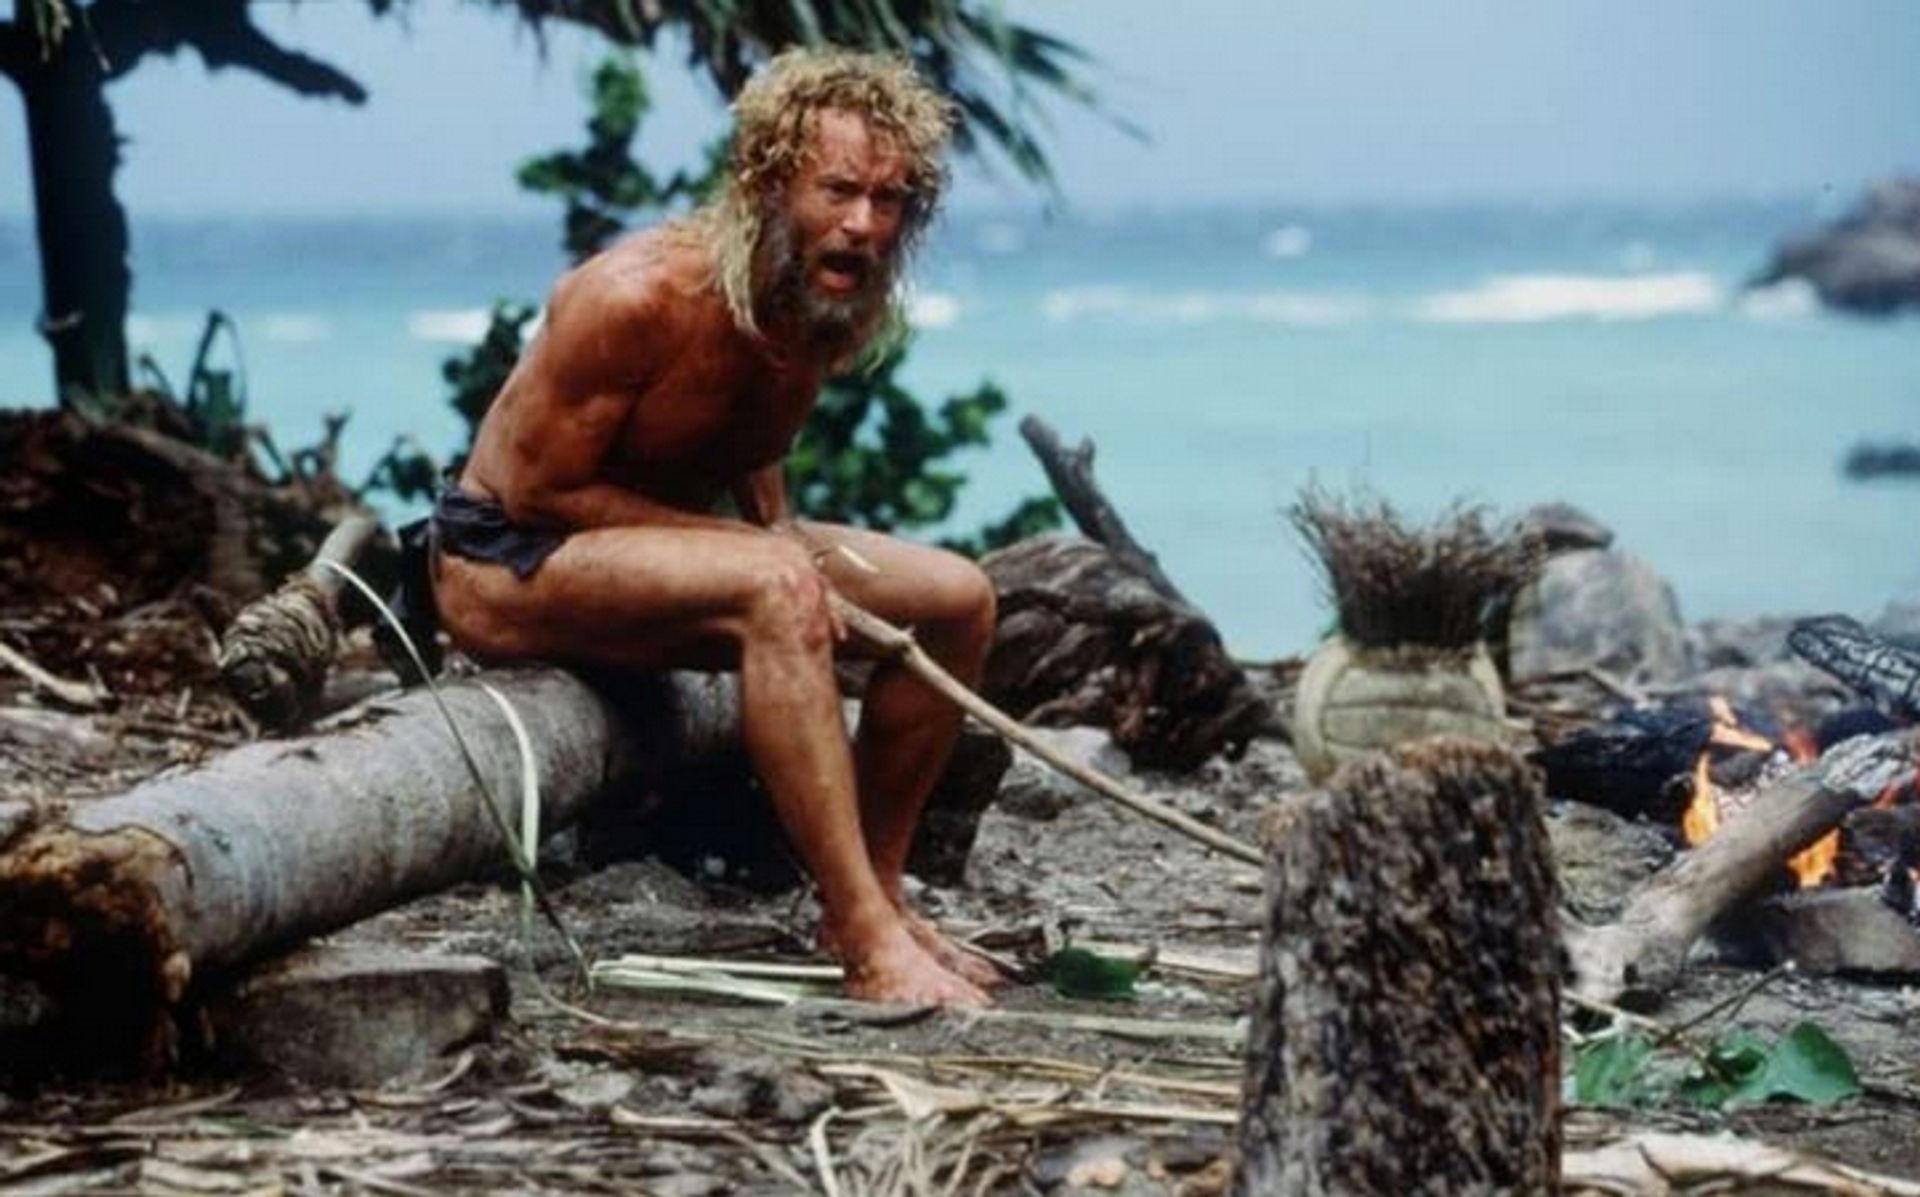 Robinson Crusoe Cast Away Tom Hanks